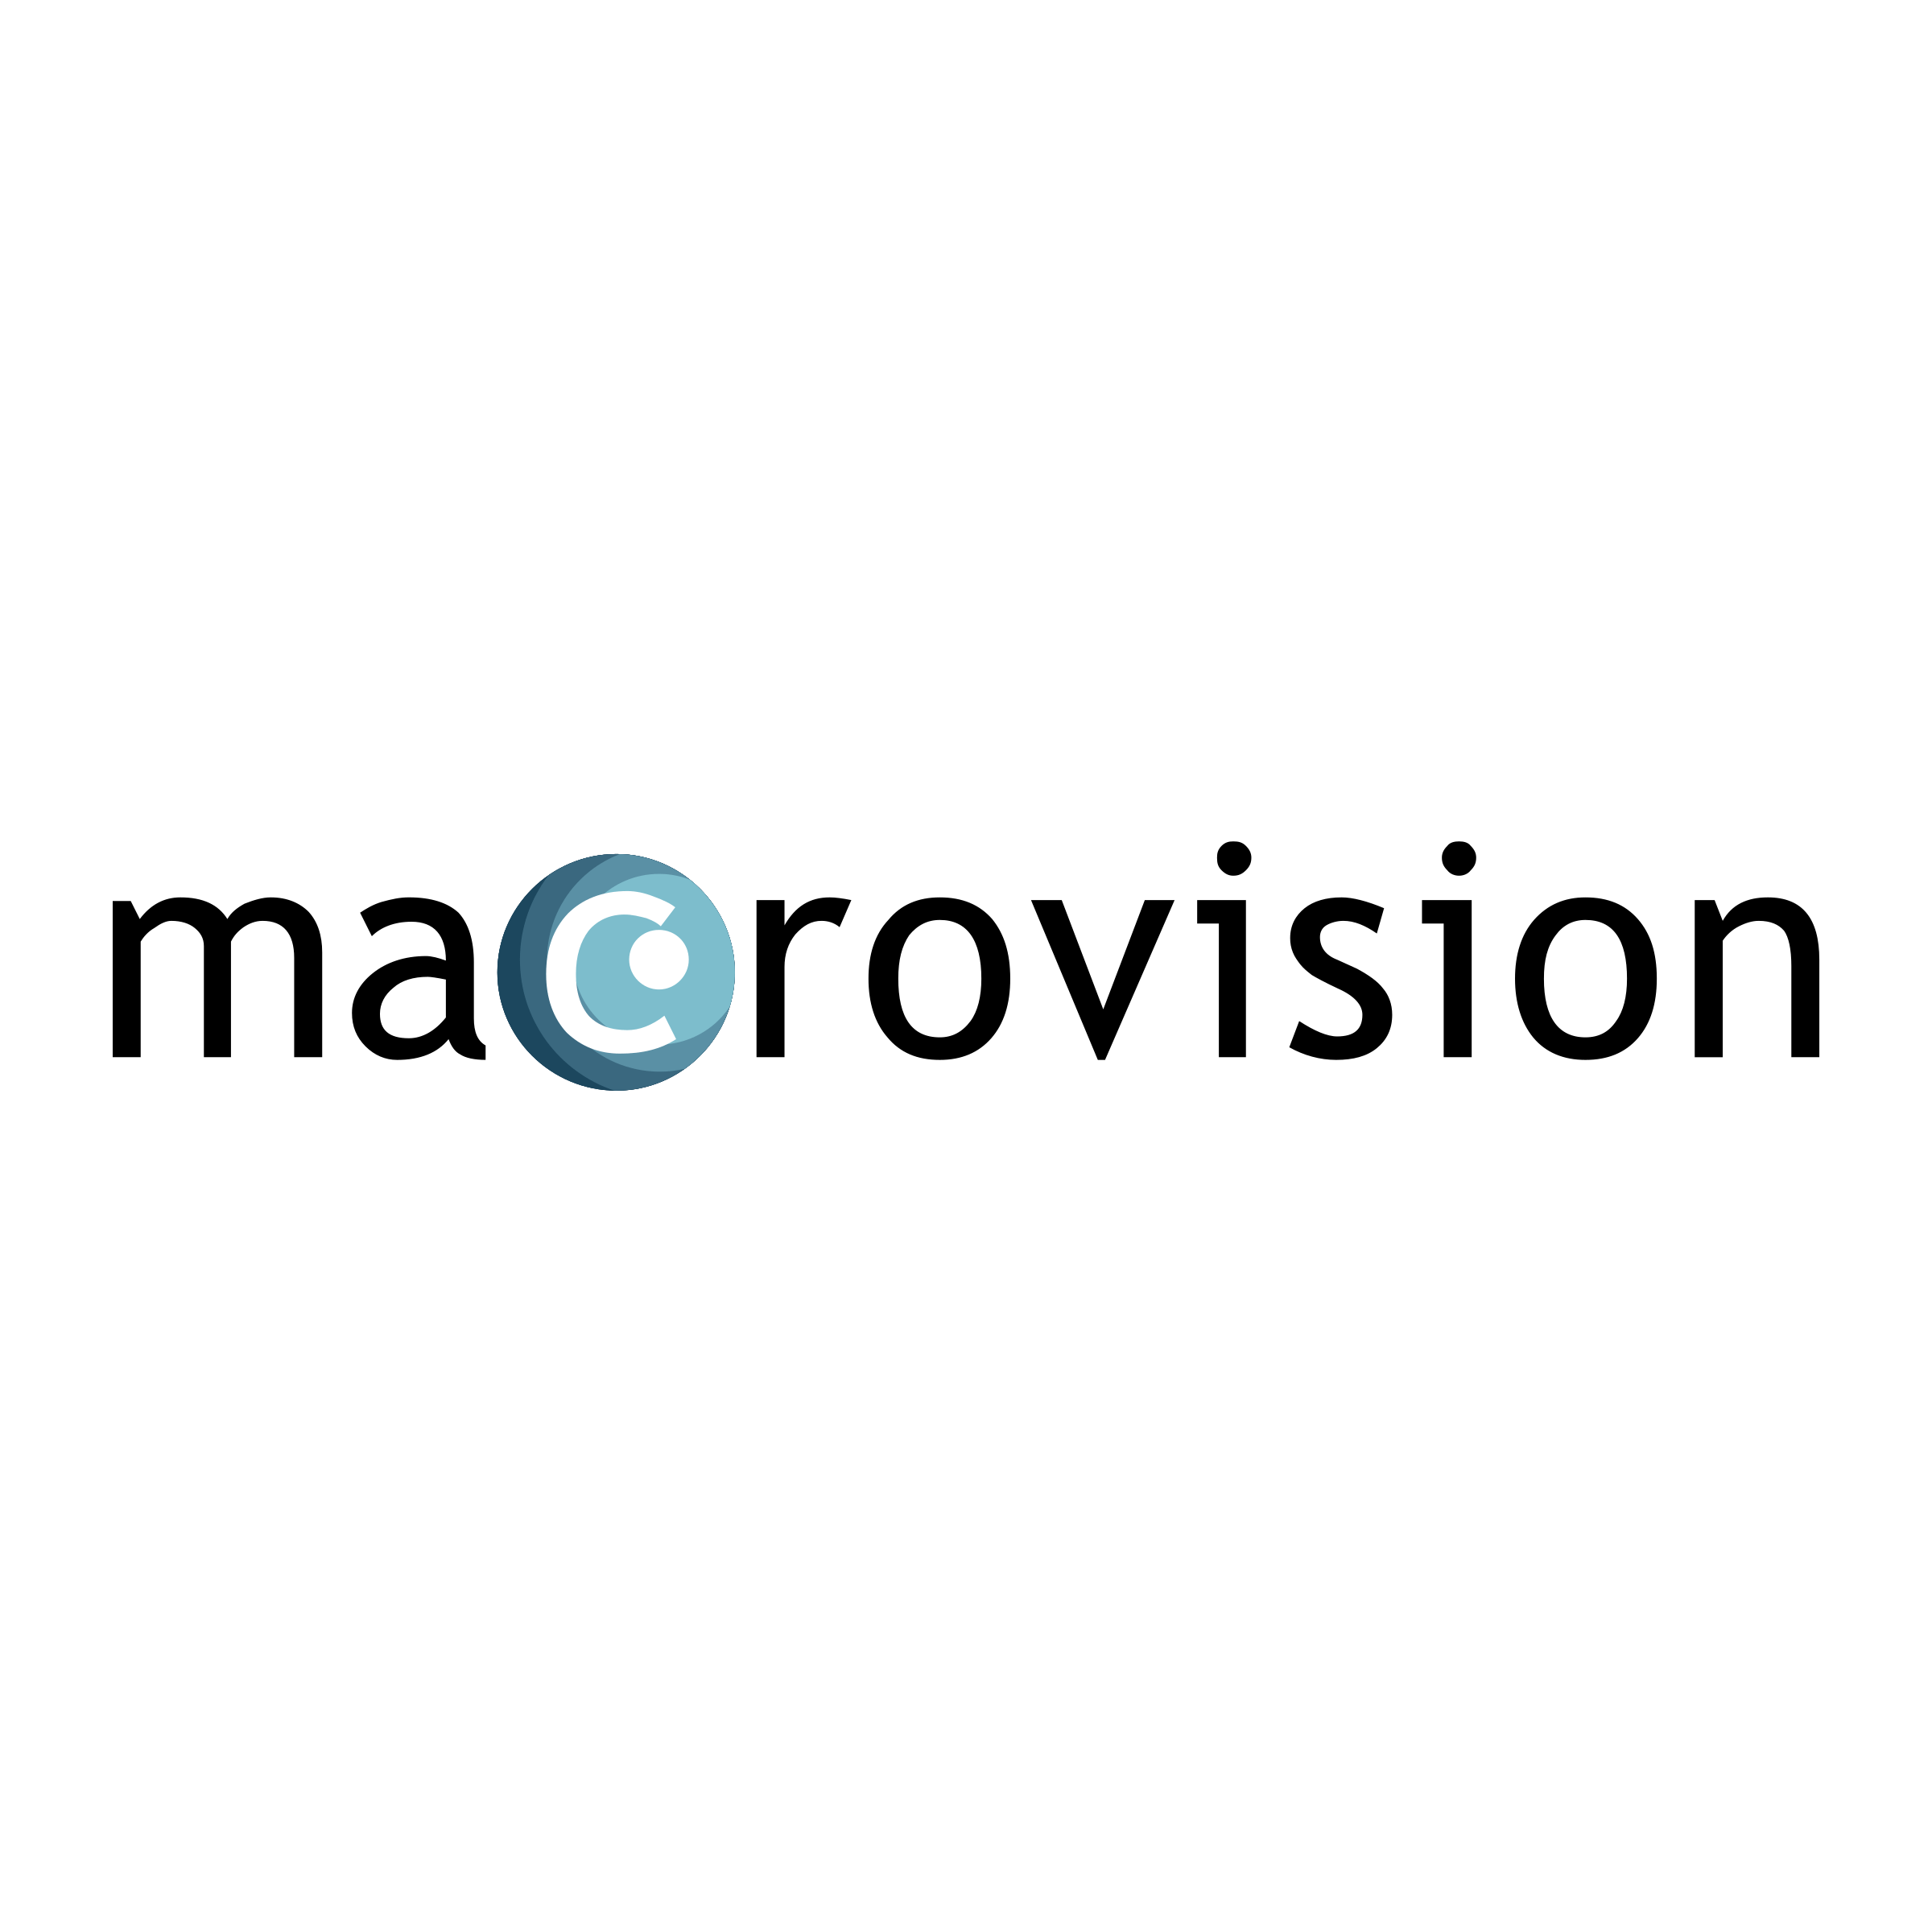 Macrovision Logo - Macrovision Logo PNG Transparent & SVG Vector